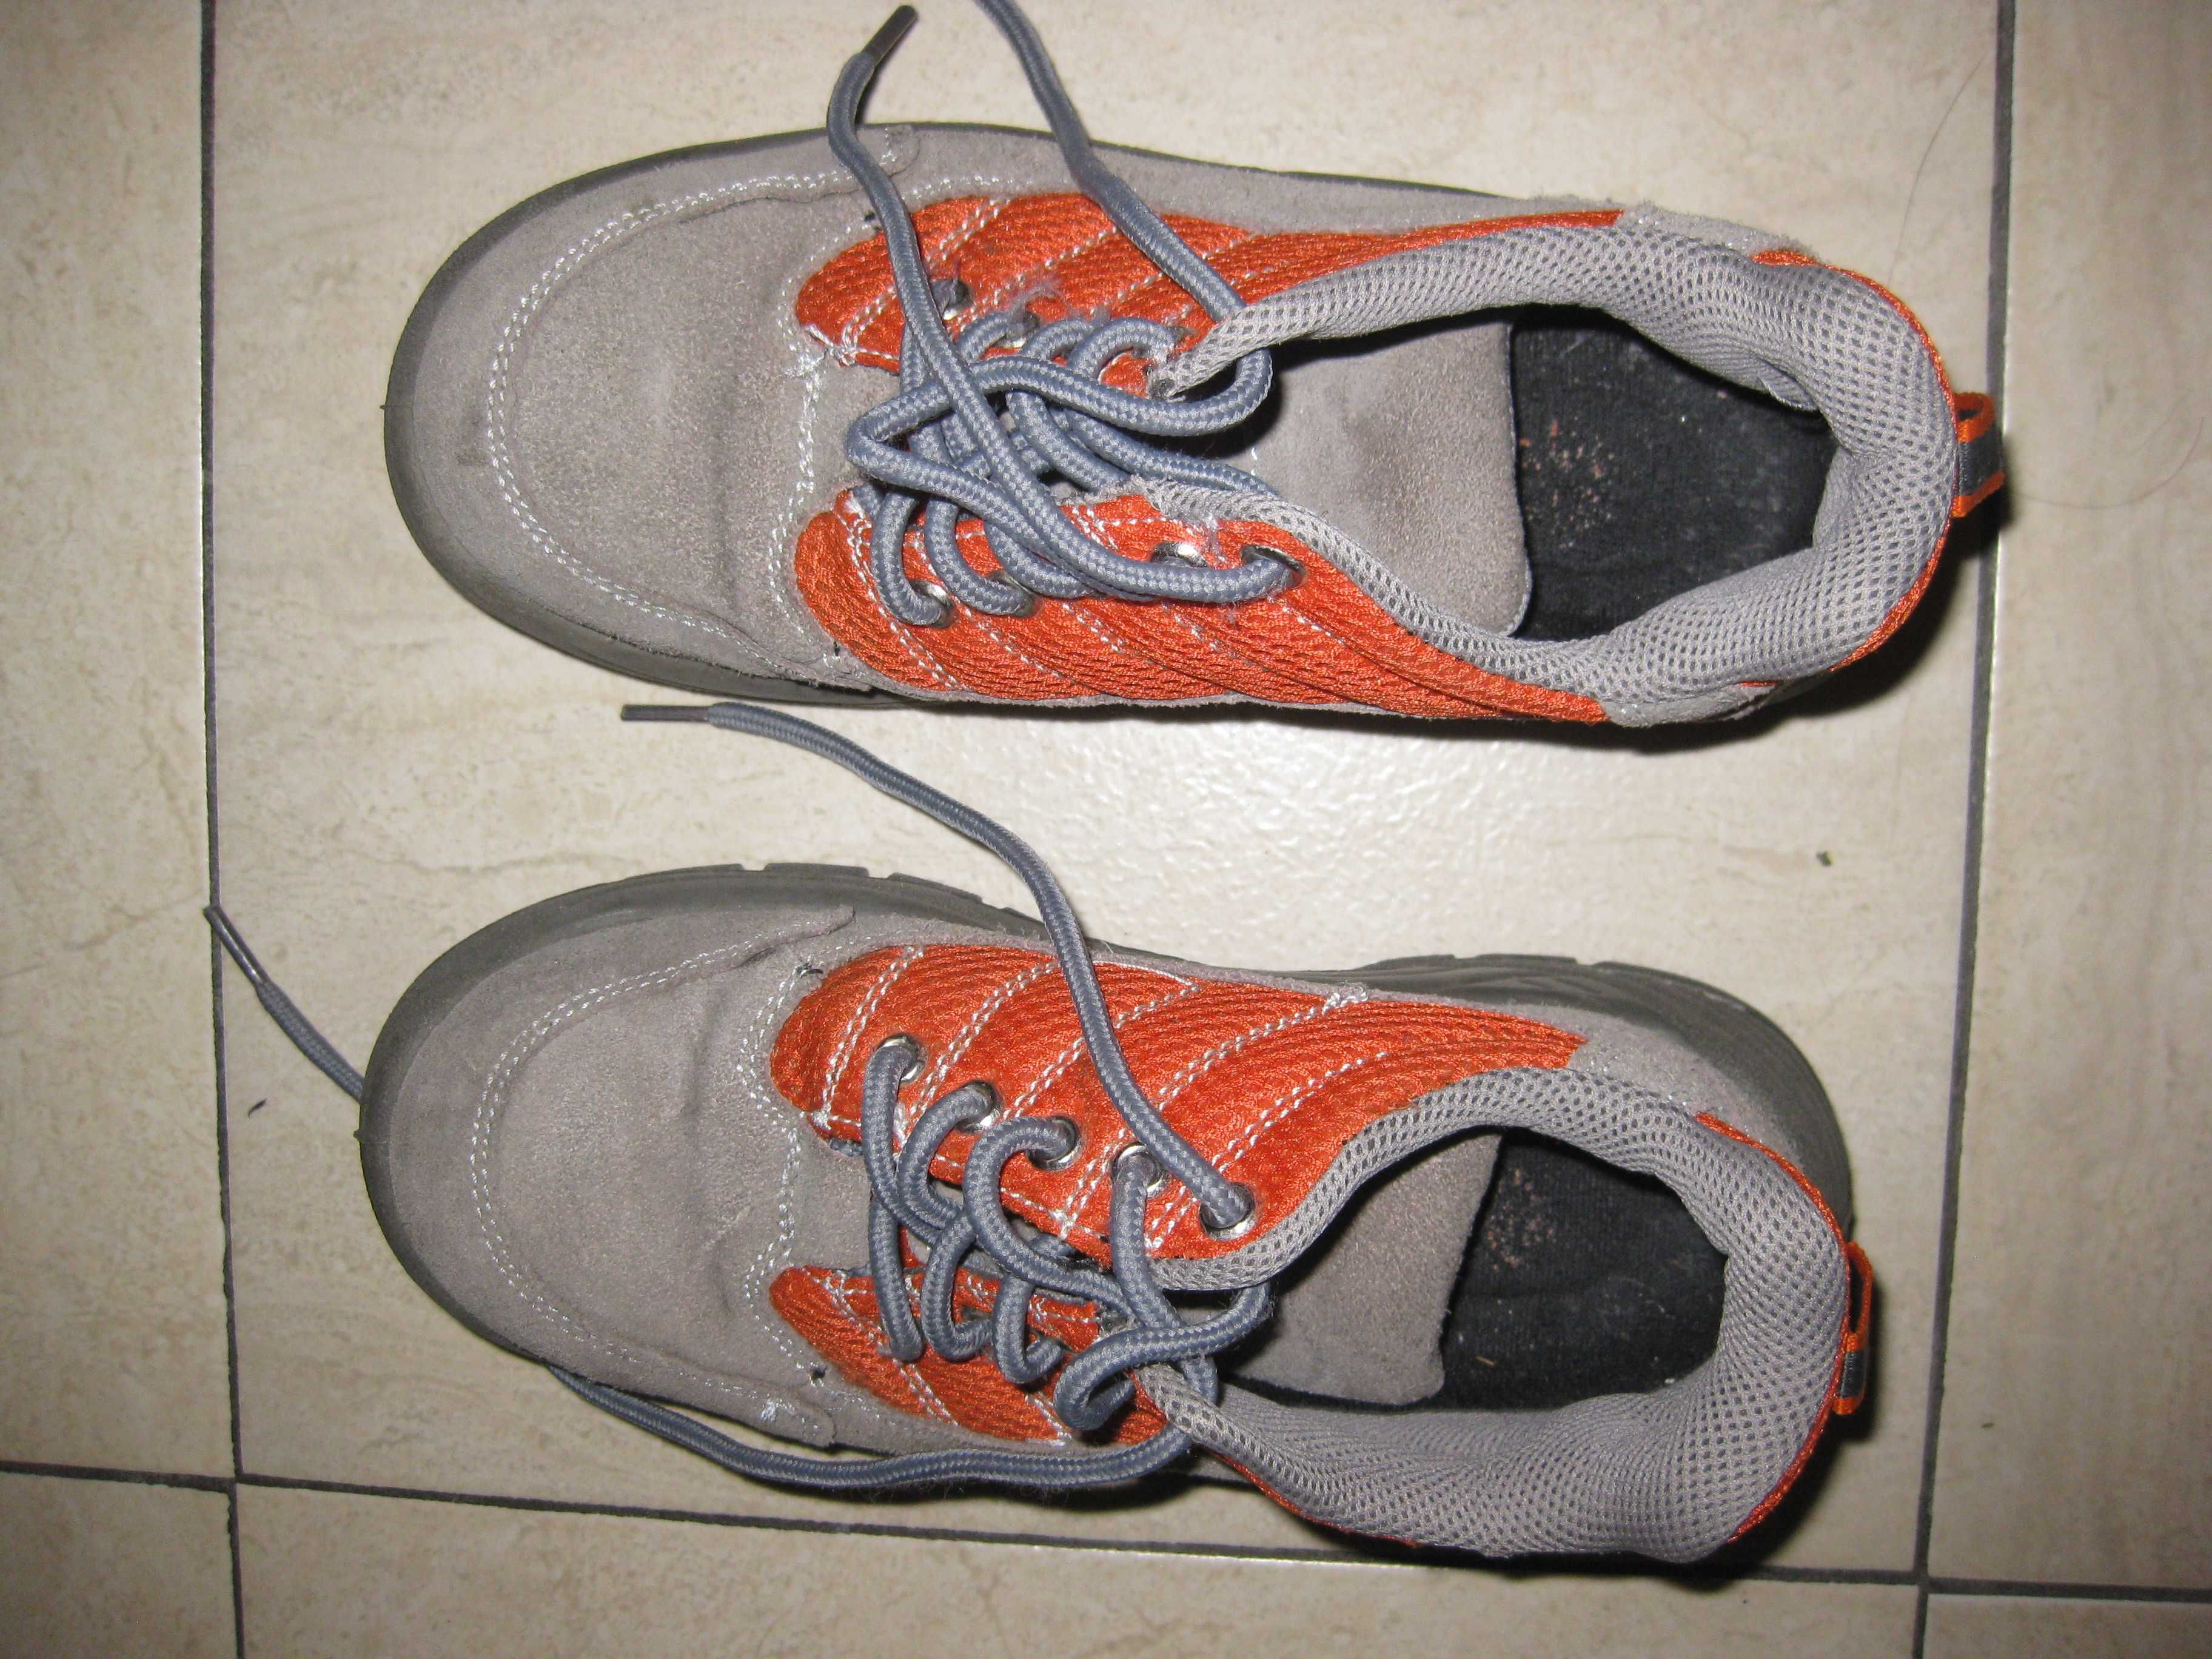 Работни обувки и маратонки